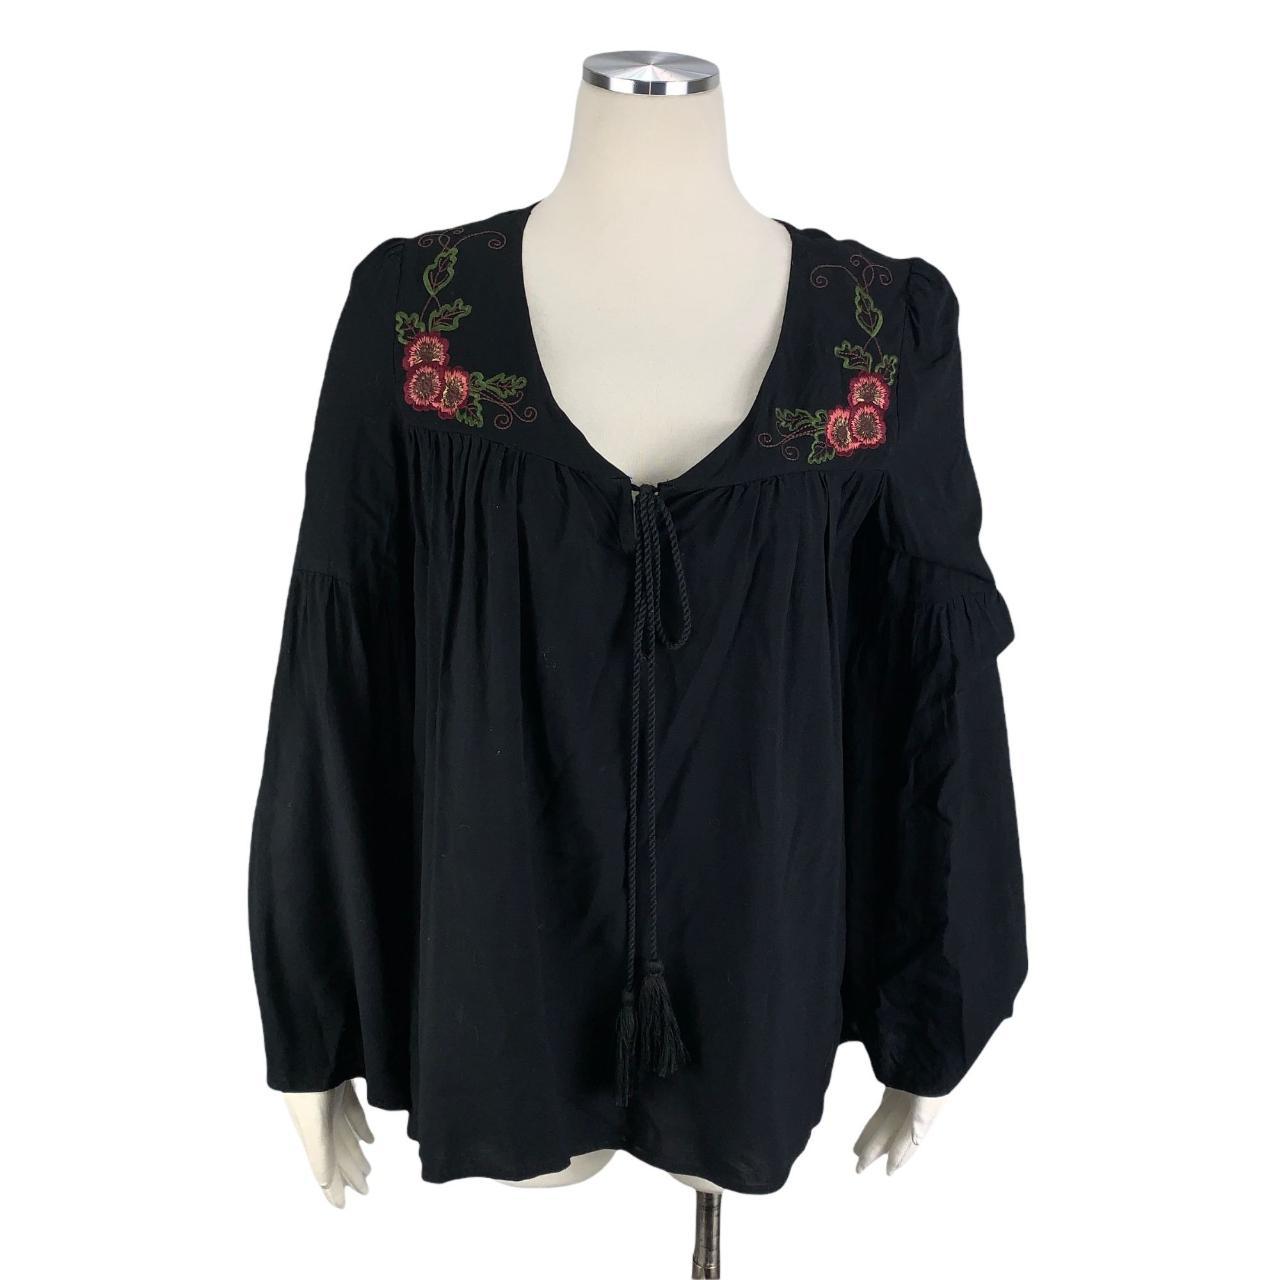 Jodifl - black loose long sleeve top with floral... - Depop